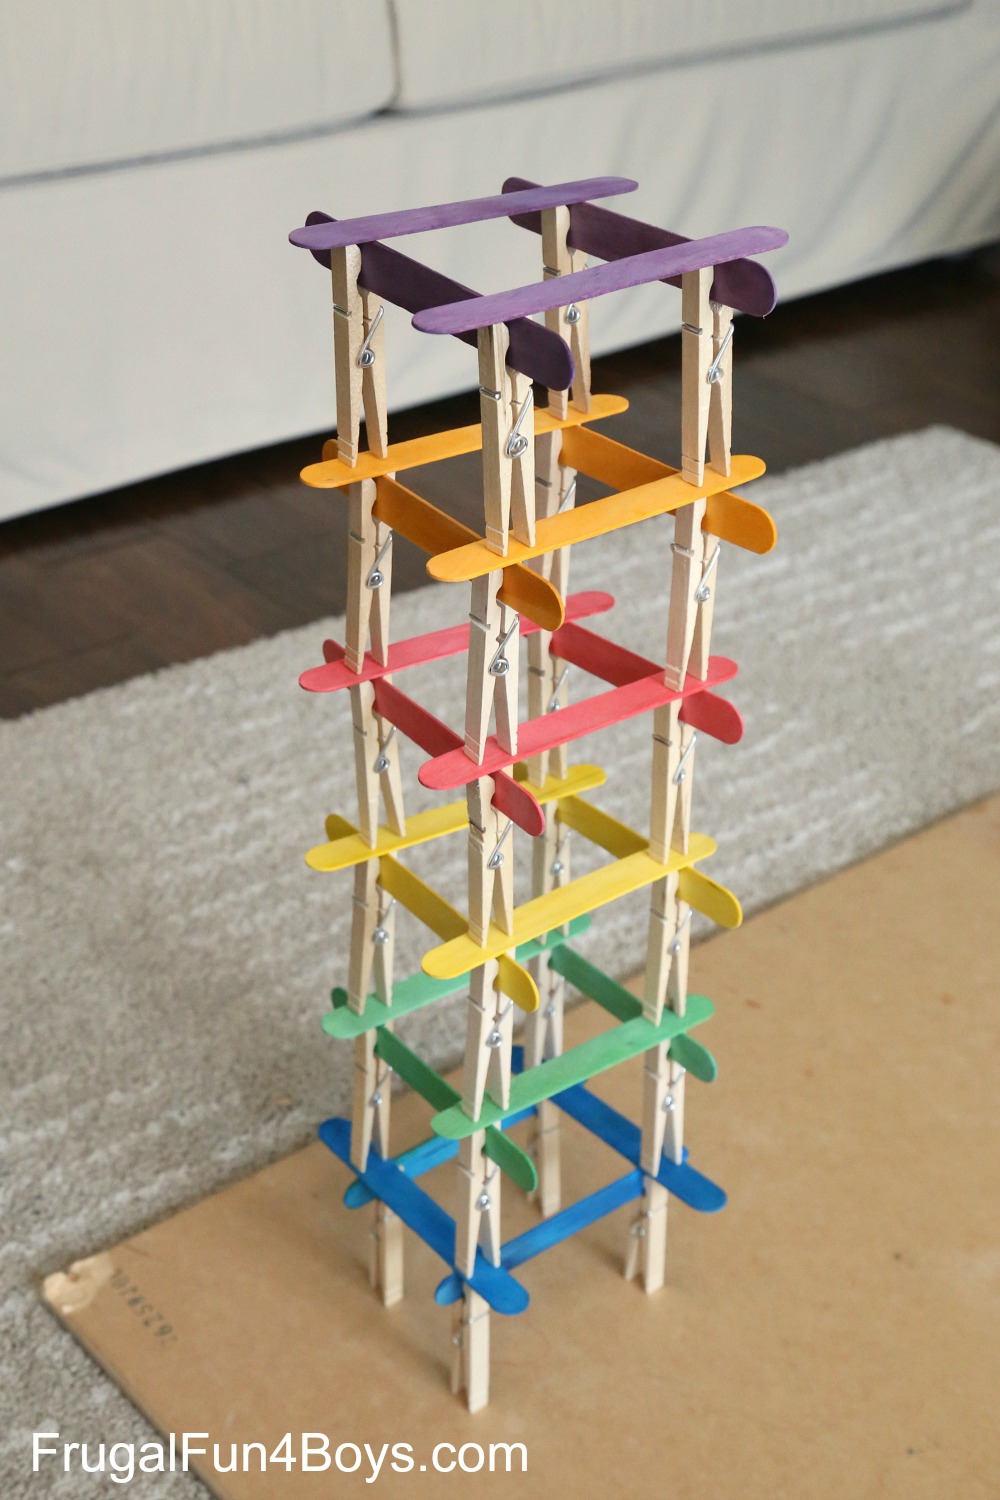 Clothespins-and-Craft-Sticks-2-Edited.jpg